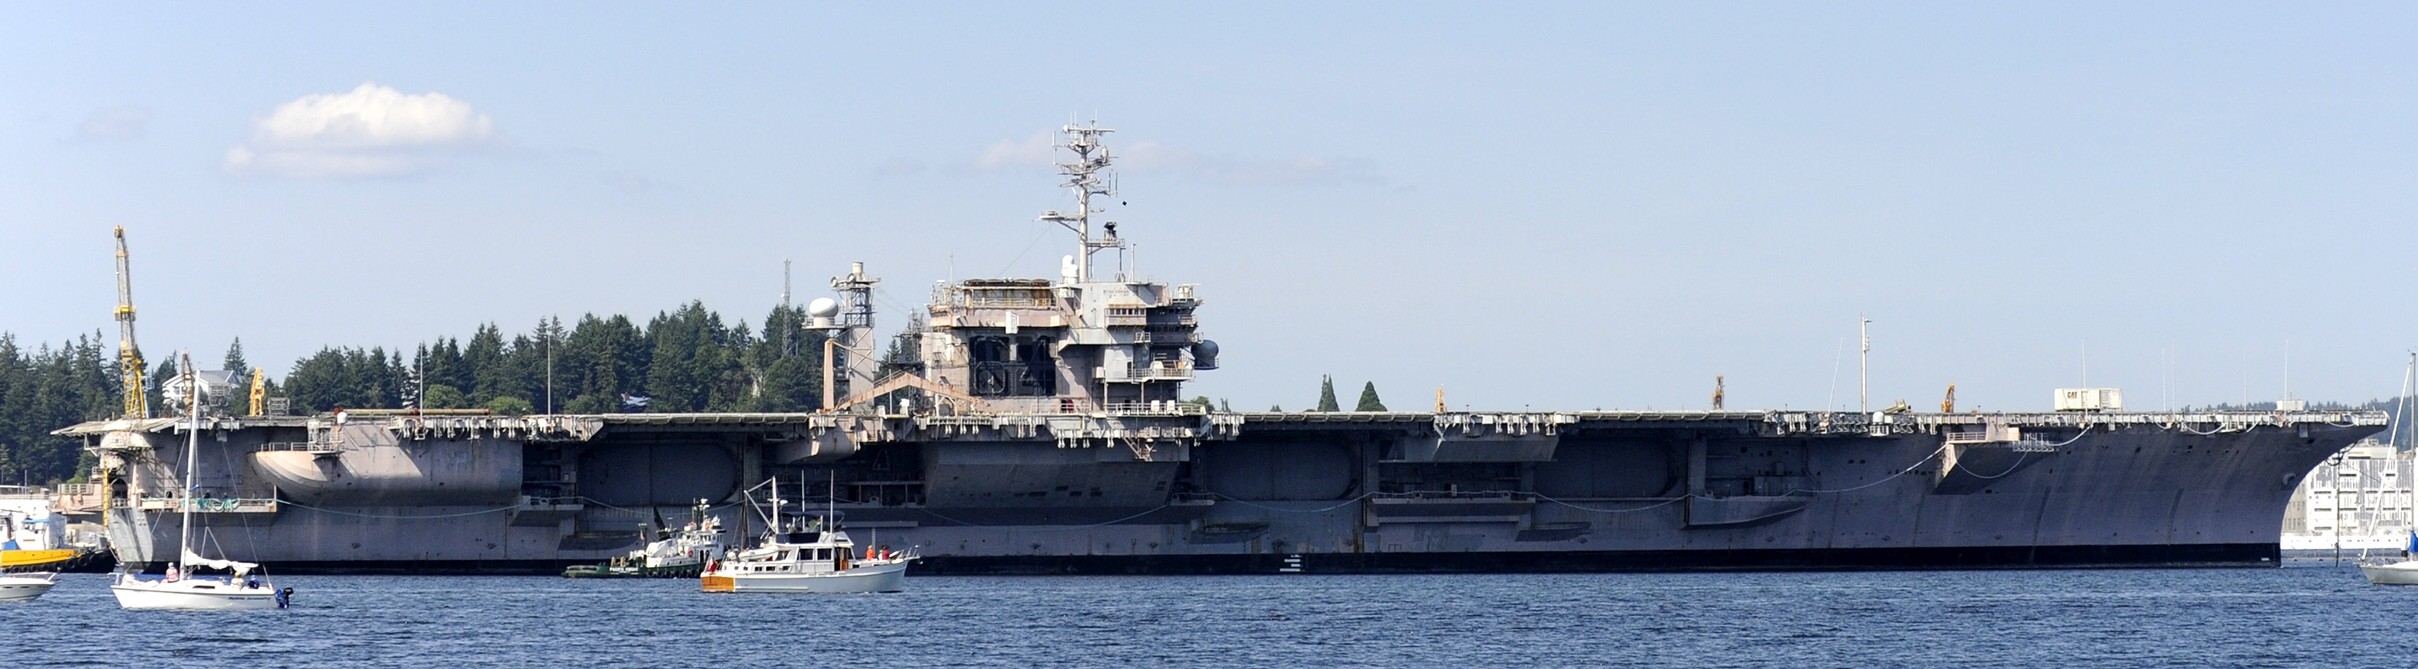 cv-64 uss constellation kitty hawk class aircraft carrier us navy bremerton washington 2014 19